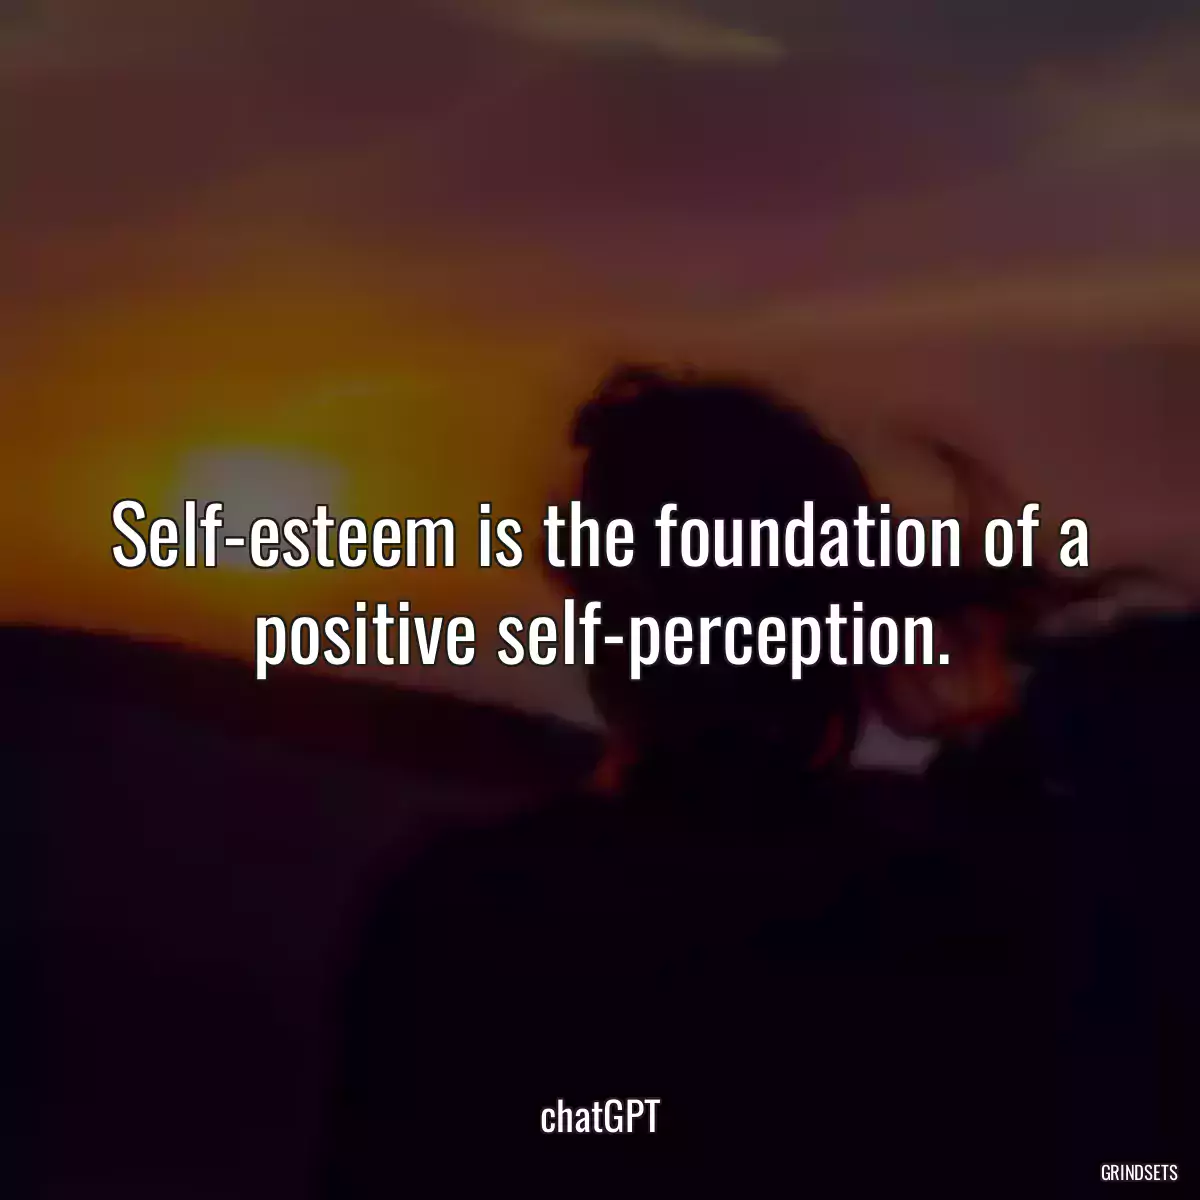 Self-esteem is the foundation of a positive self-perception.